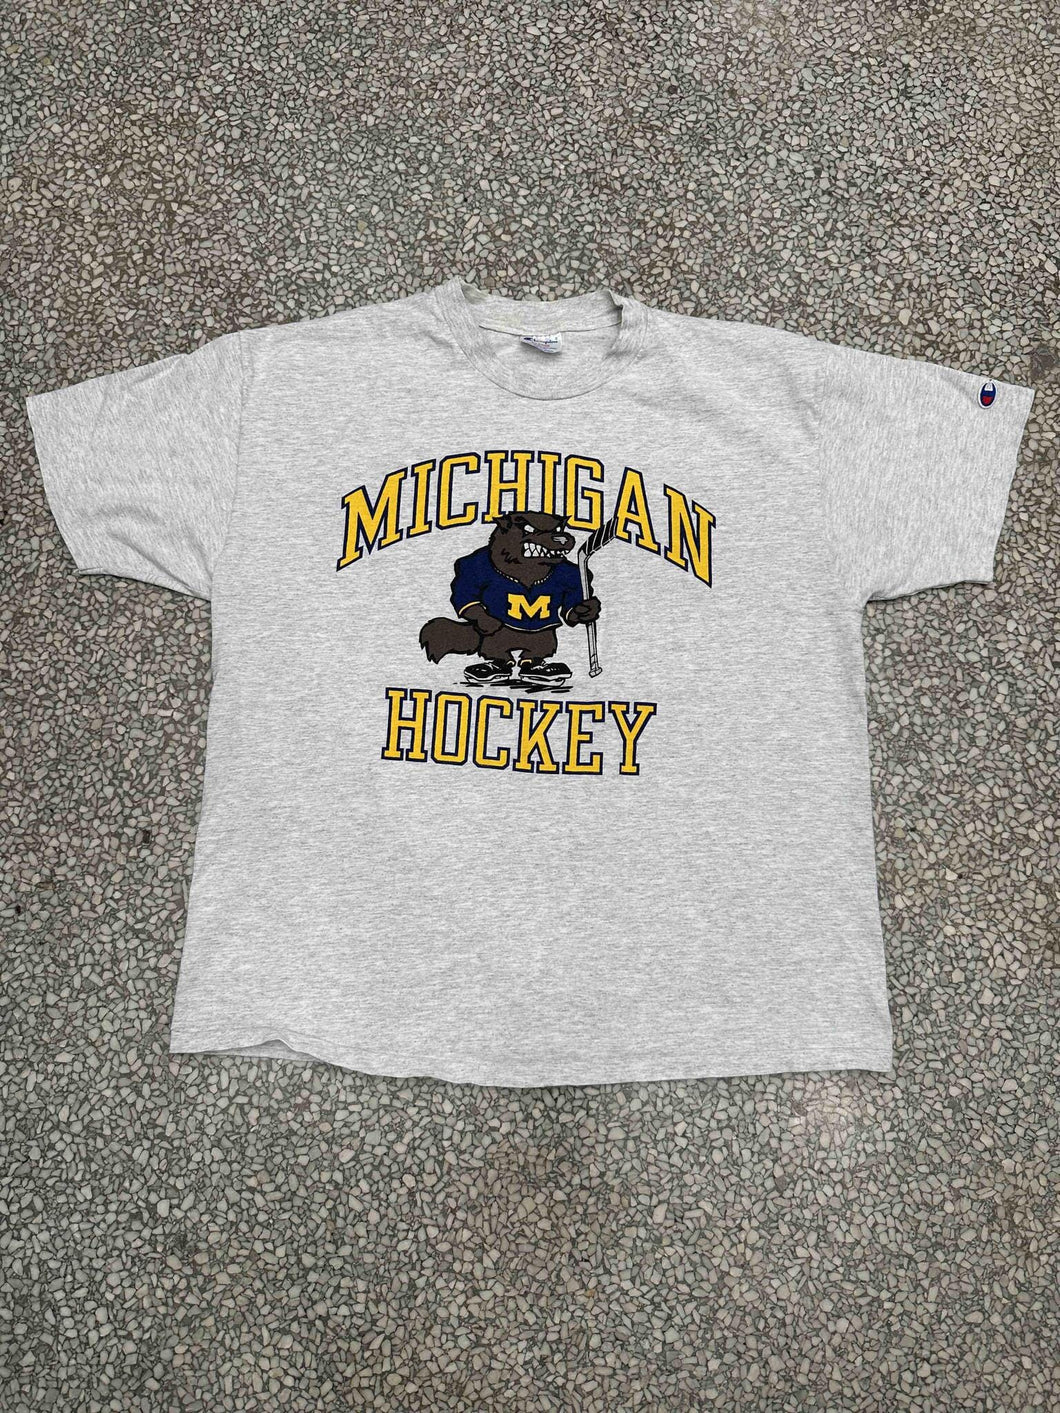 Michigan Wolverines Hockey Vintage 90s Cartoon Champion Tee Grey ABC Vintage 